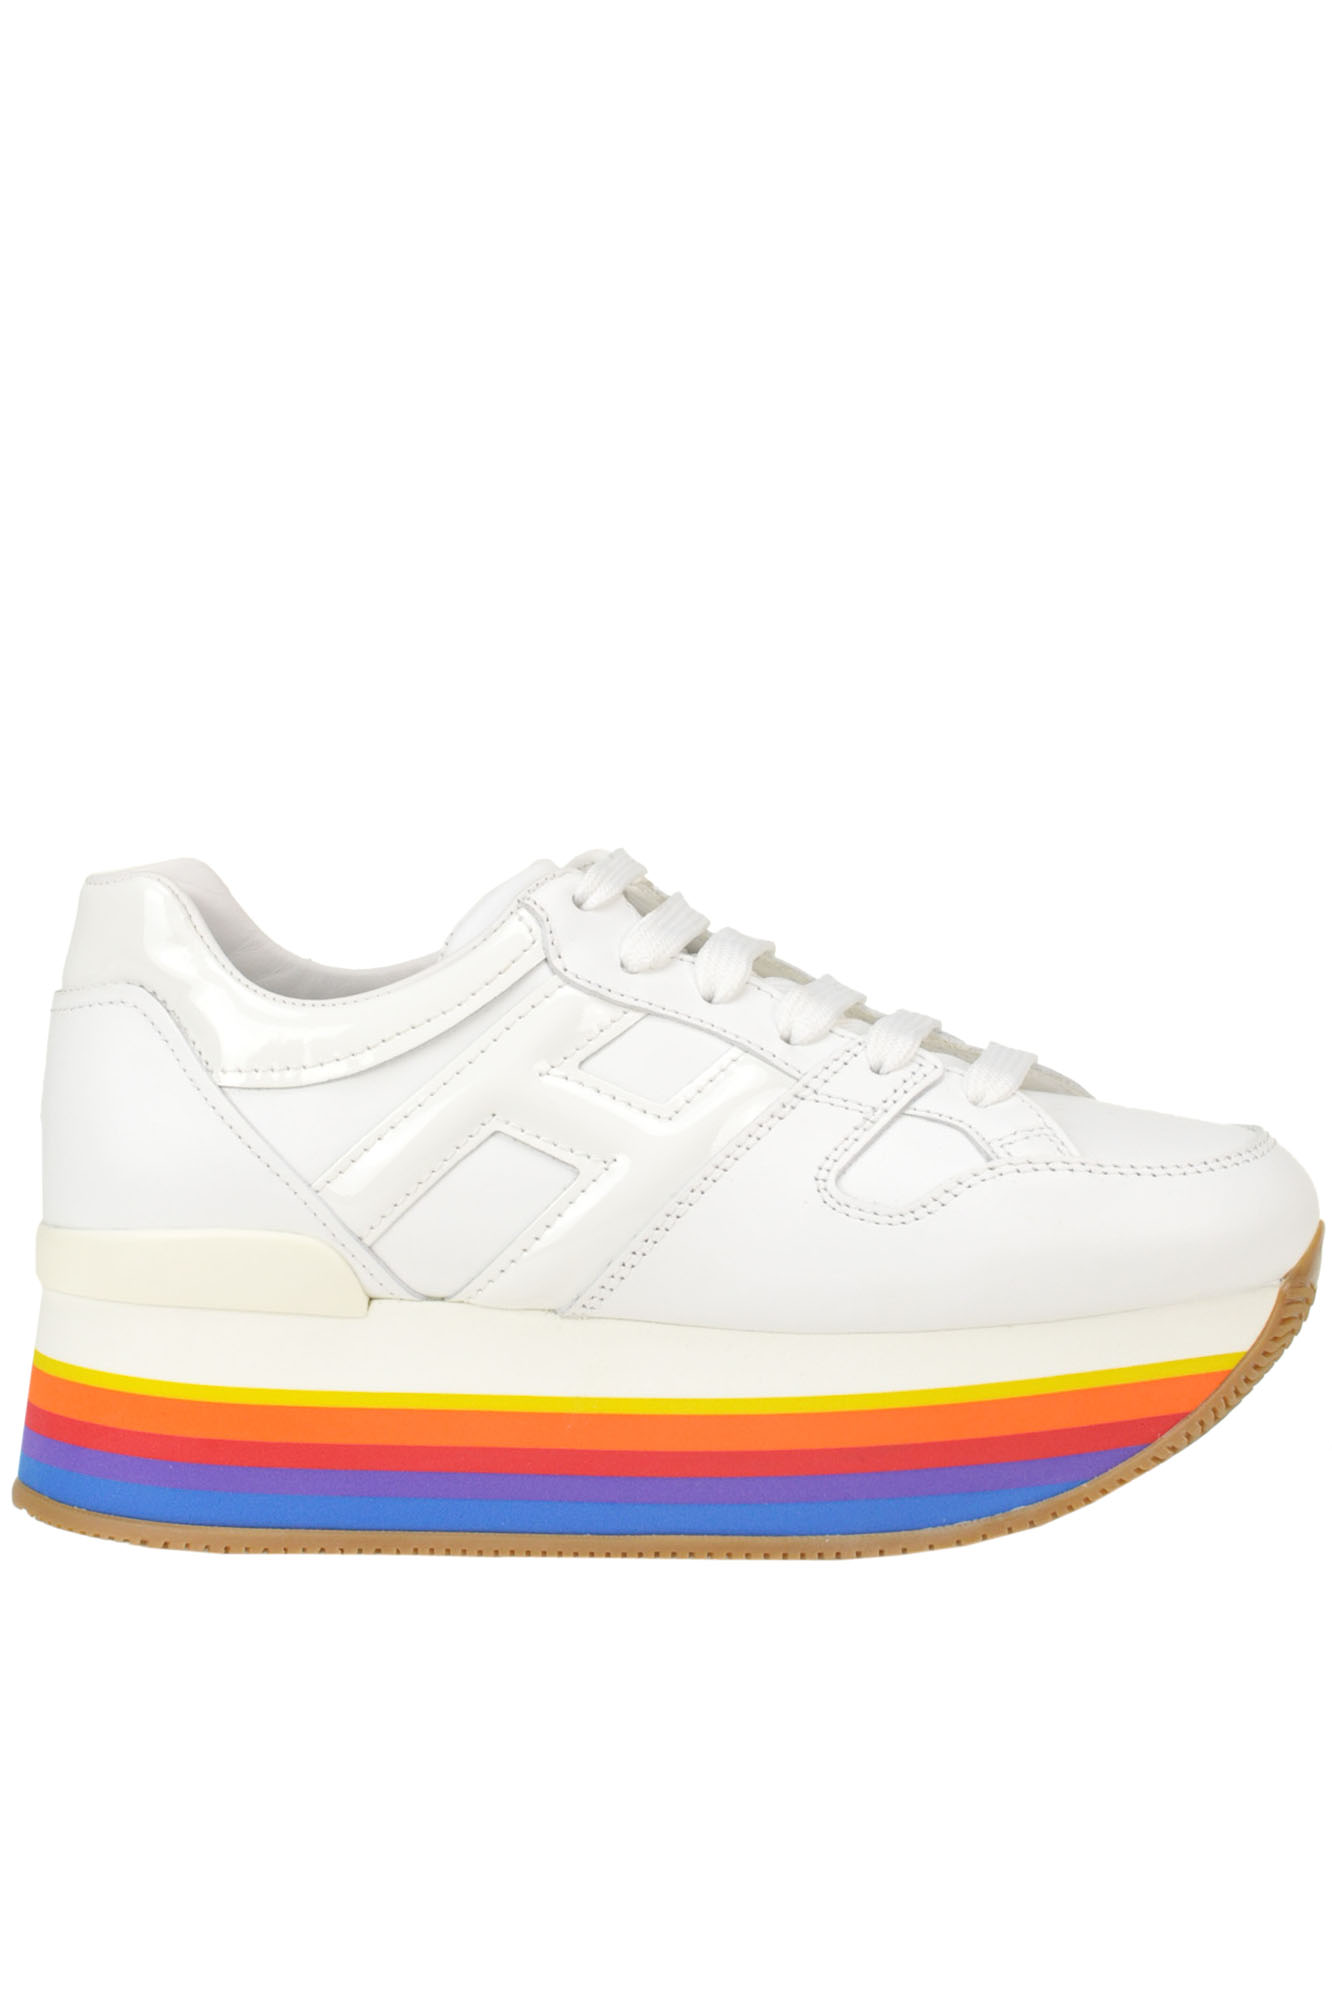 Hogan Micro Rainbow H421 Sneakers In White